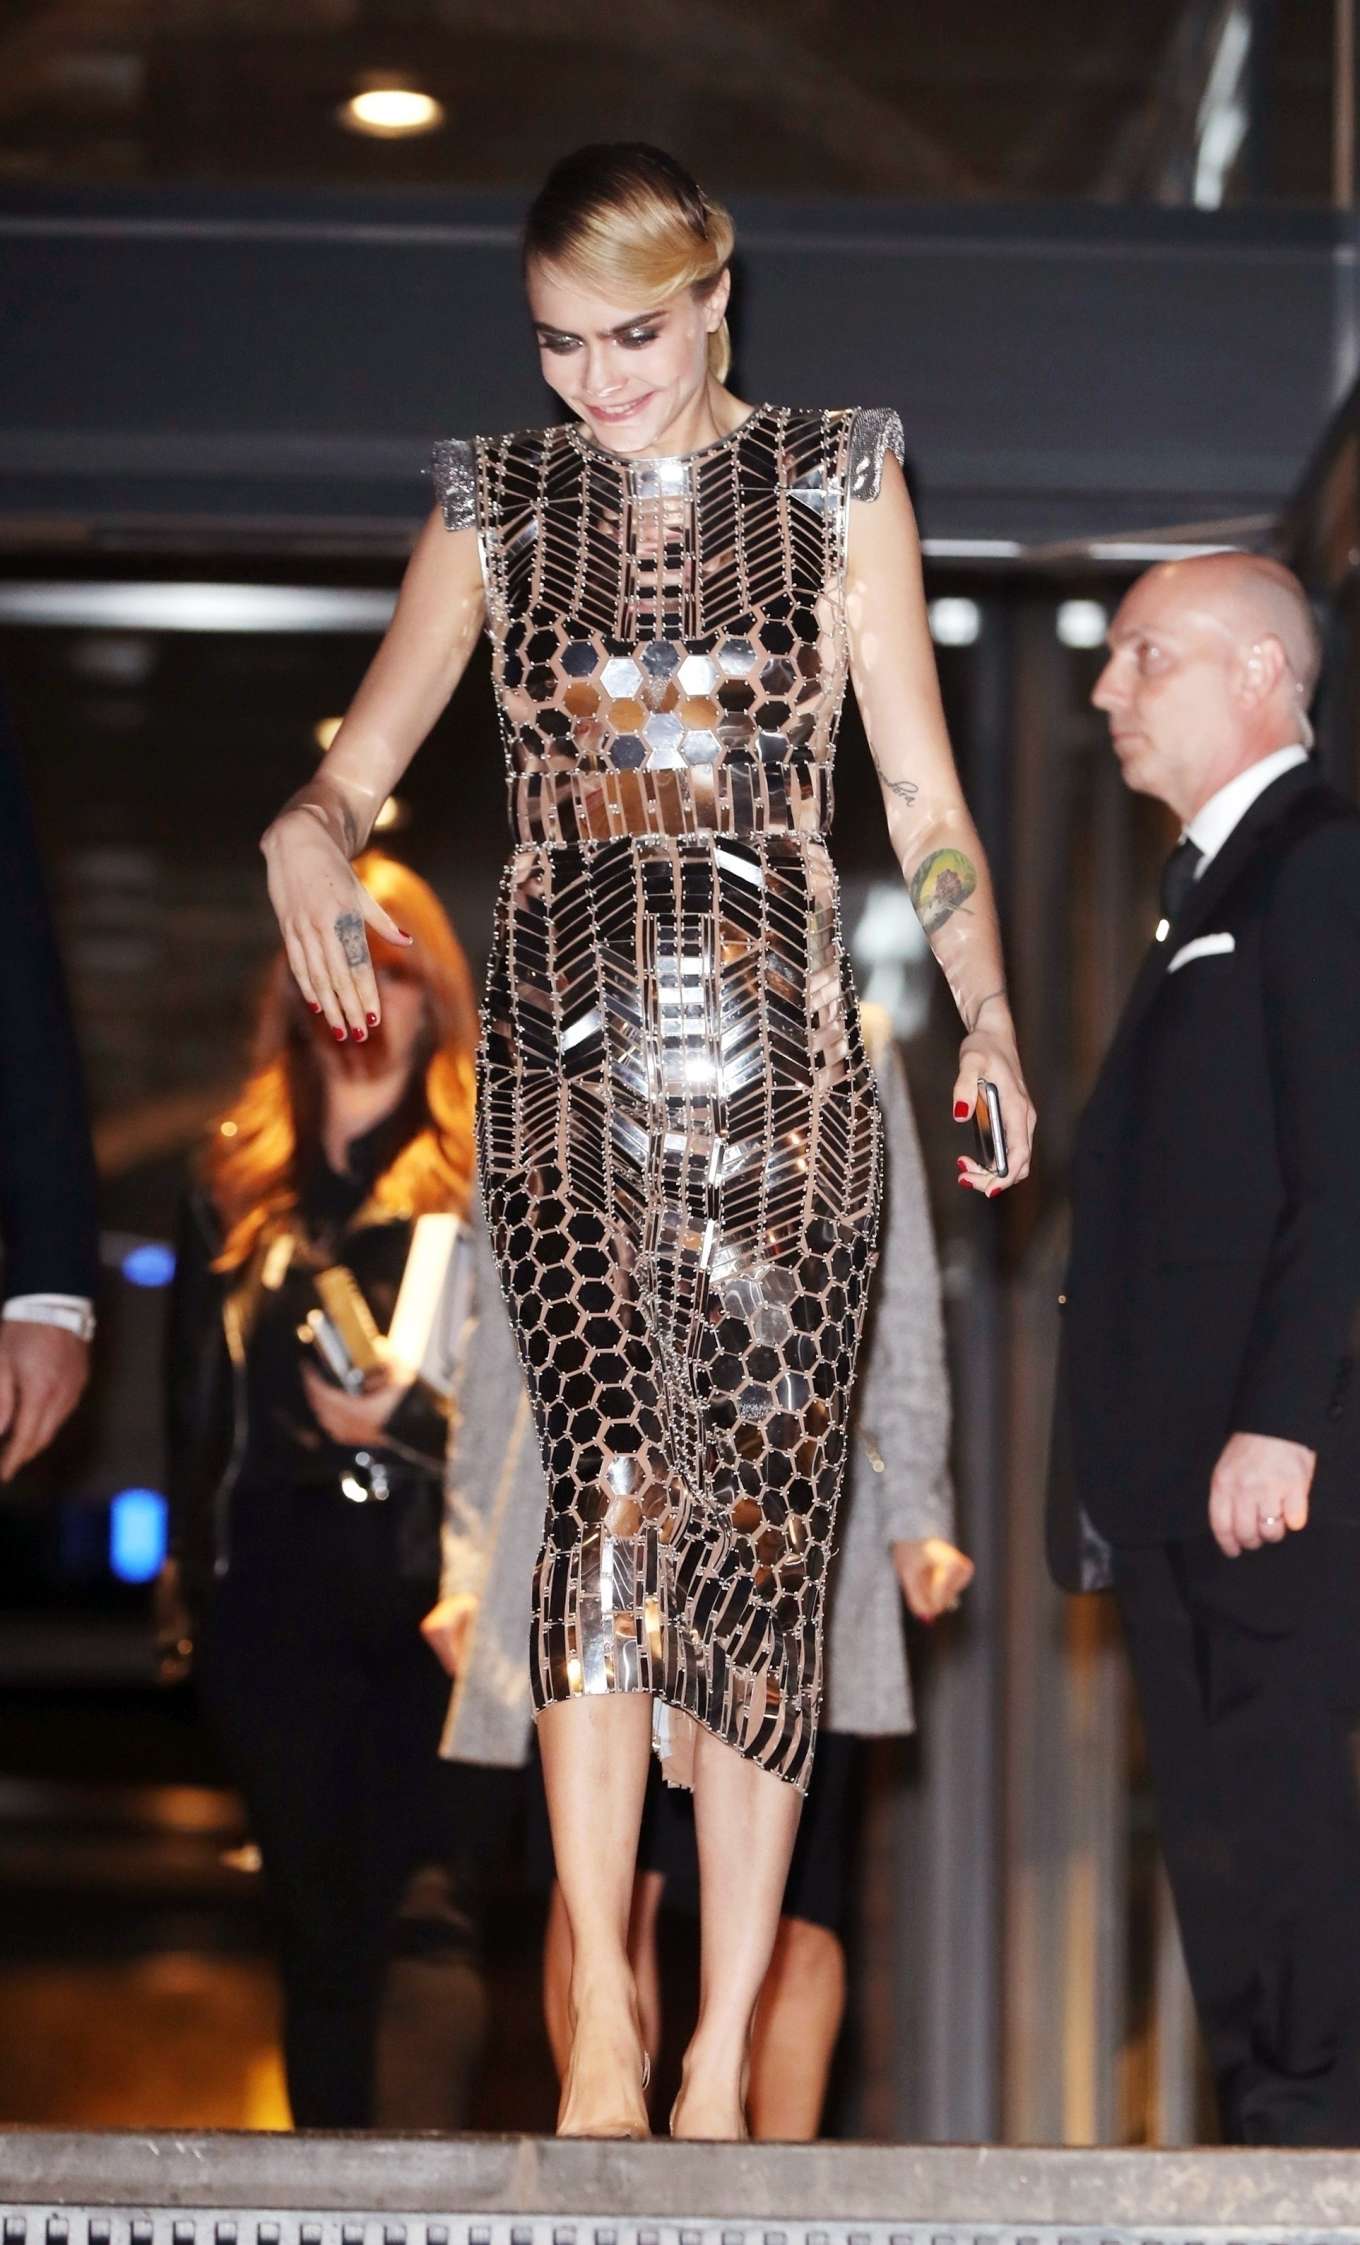 Cara Delevingne in Gold Metallic Dress-14 | GotCeleb